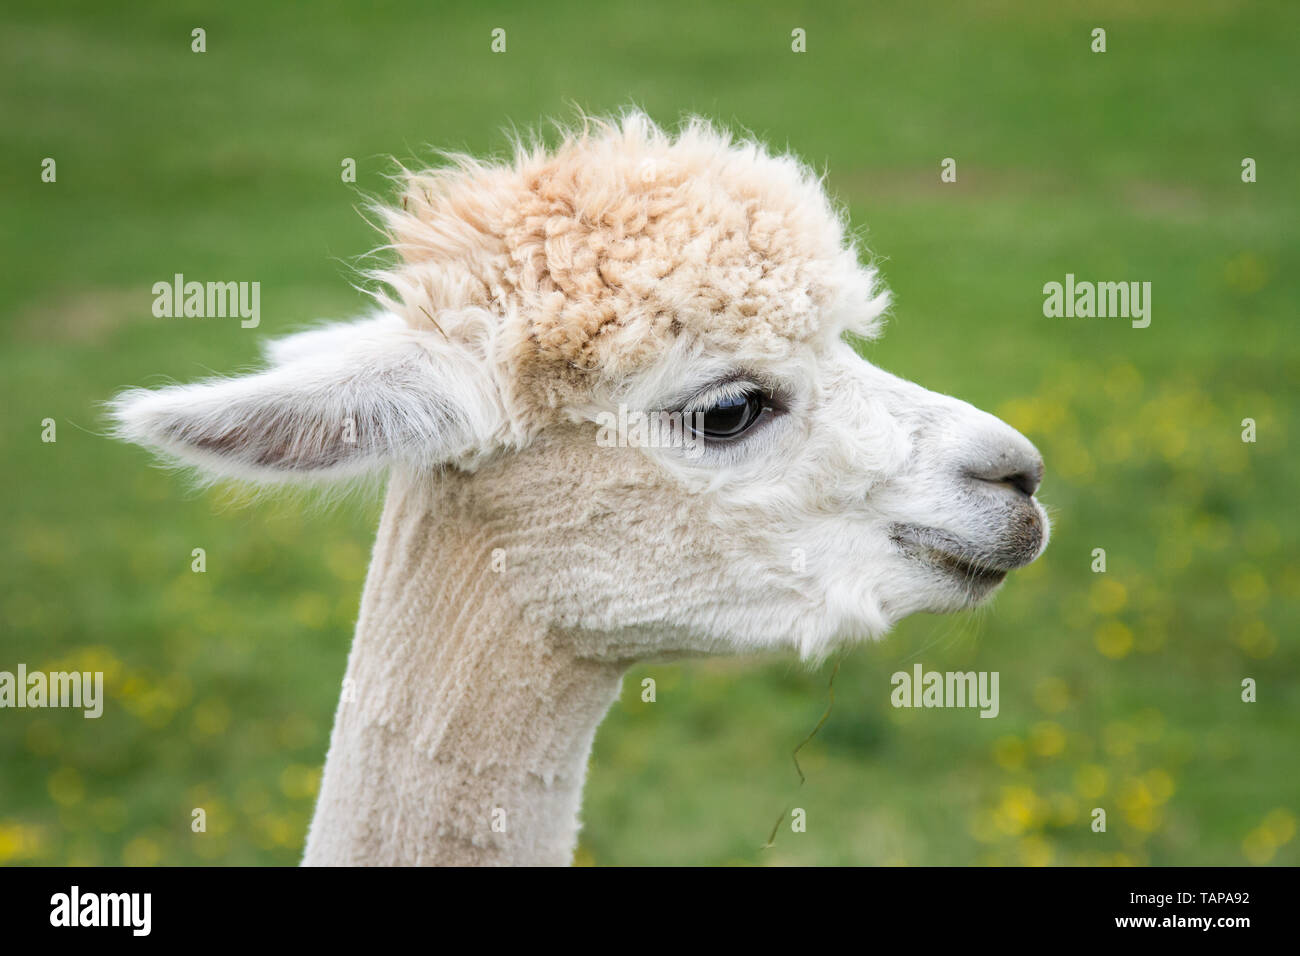 Head portrait of a white alpaca Stock Photo